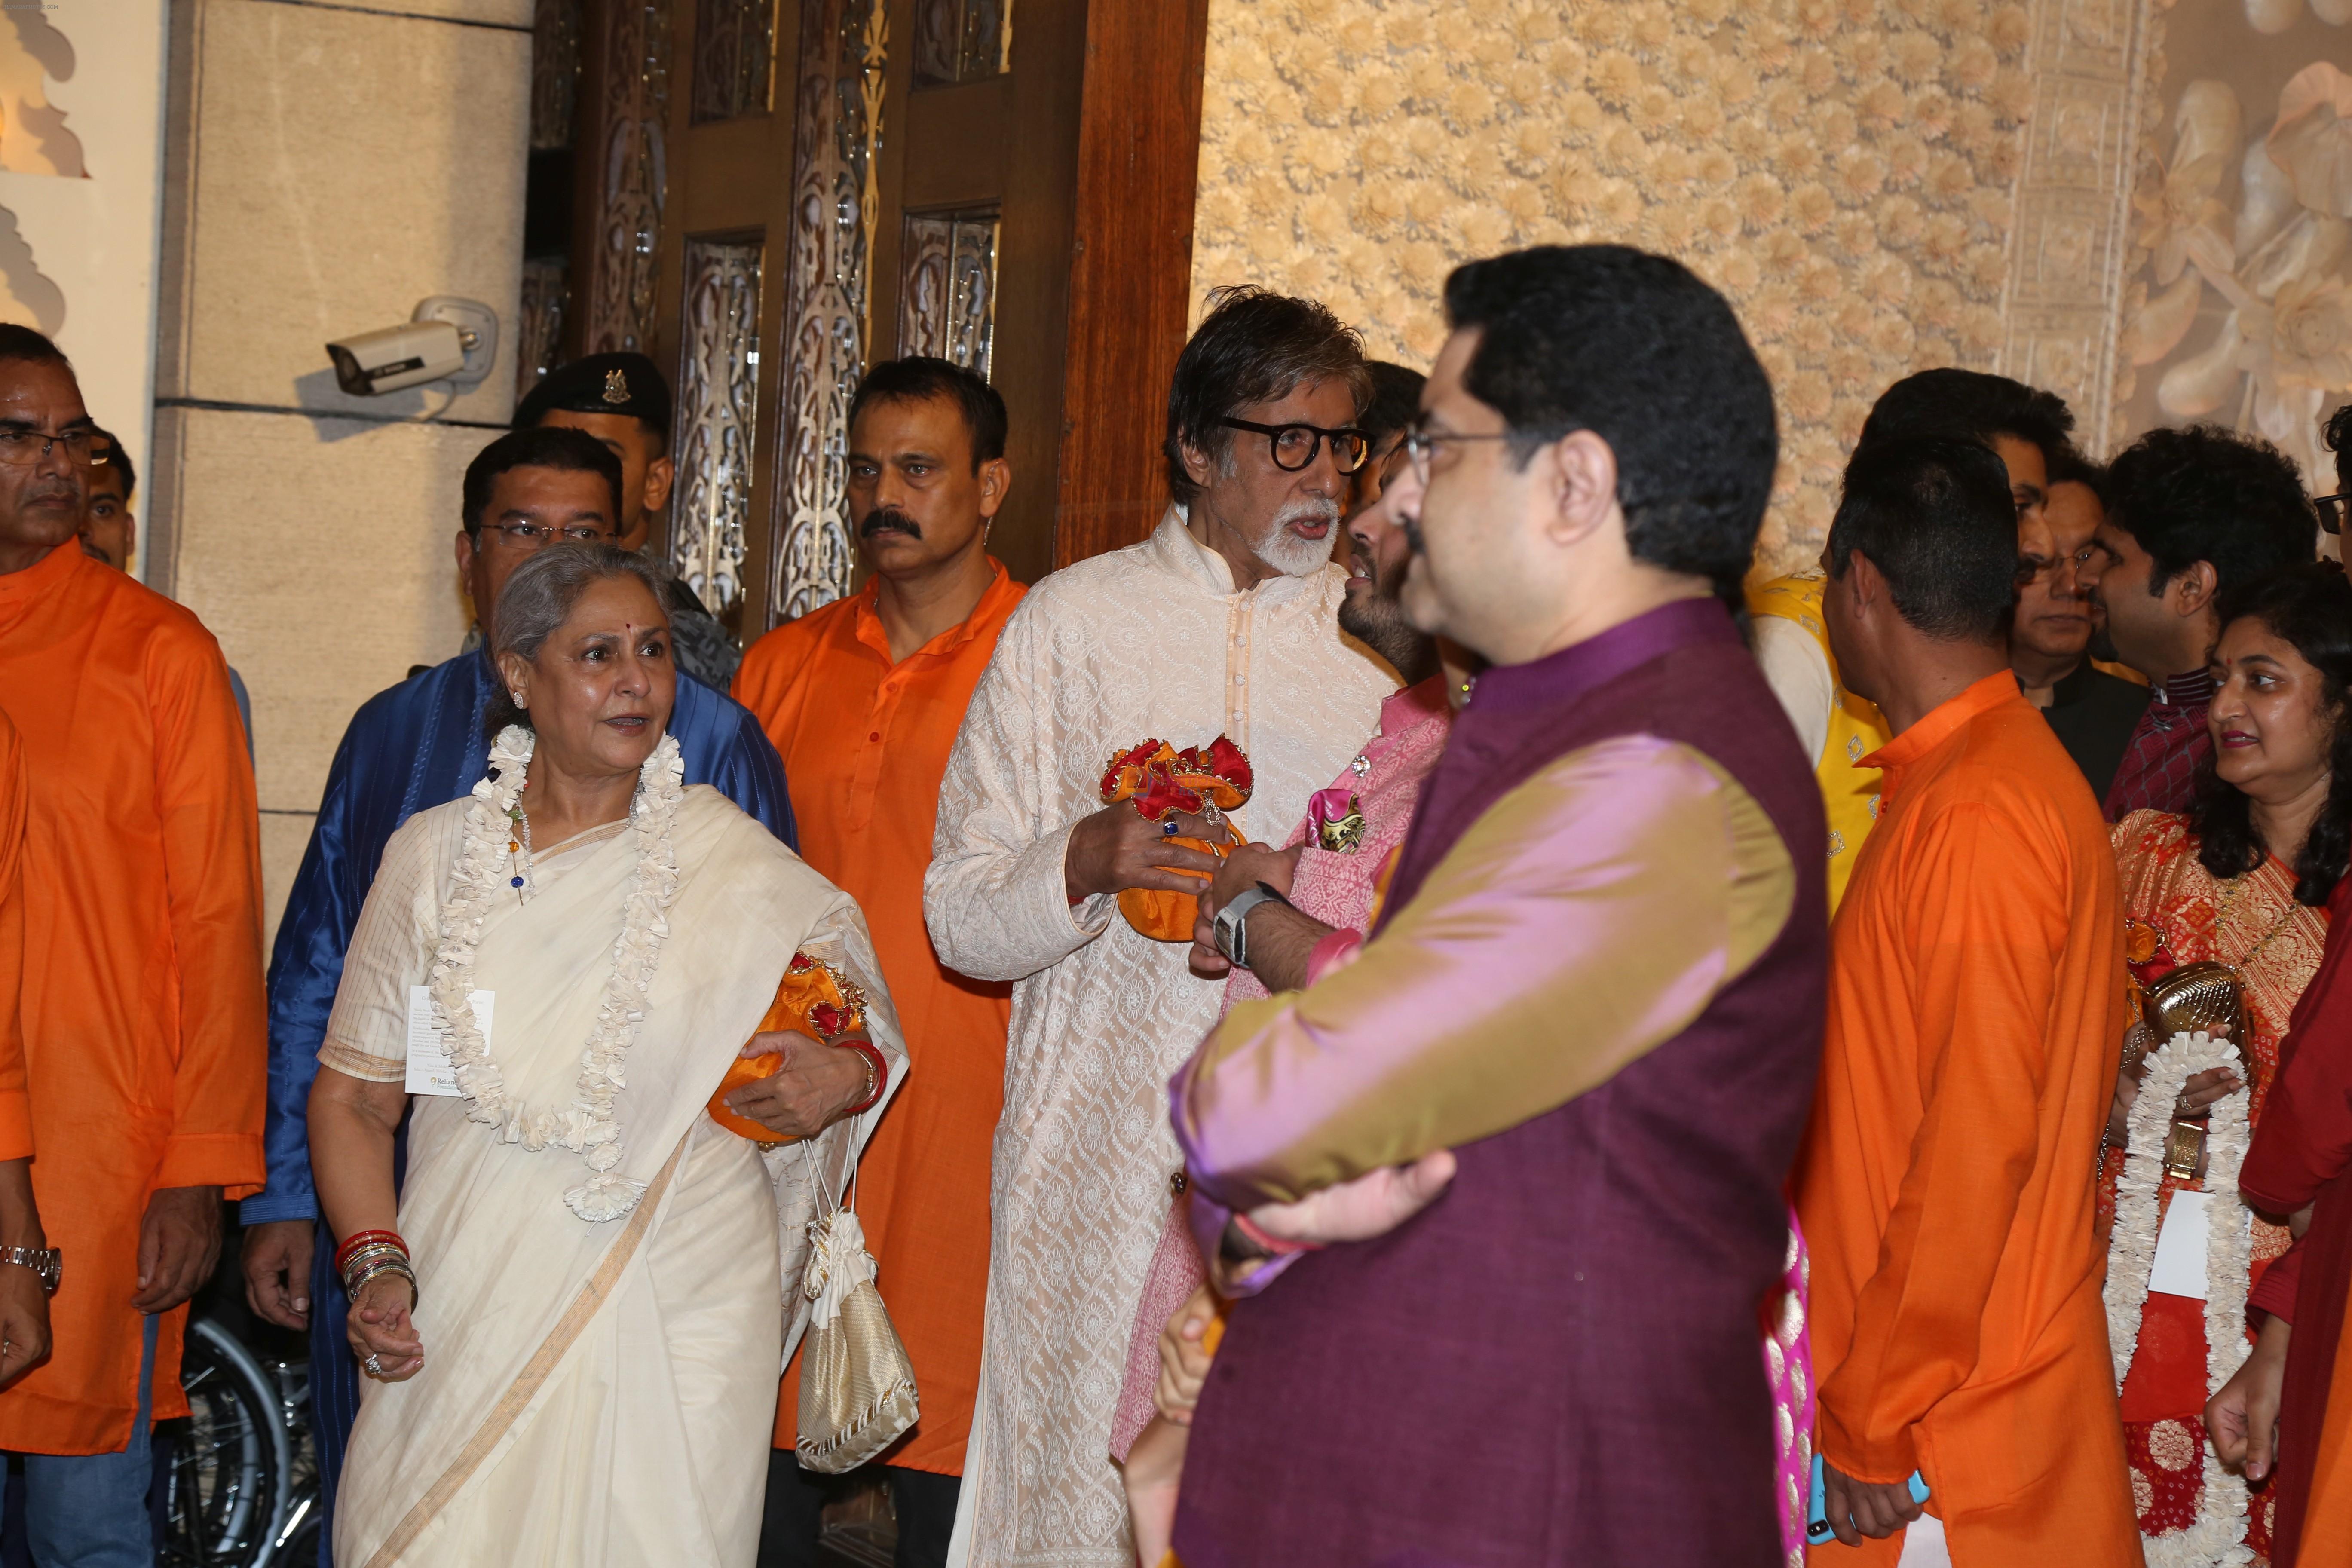 Amitabh Bachchan at Mukesh Ambani's house for Ganpati celebration on 2nd Sept 2019